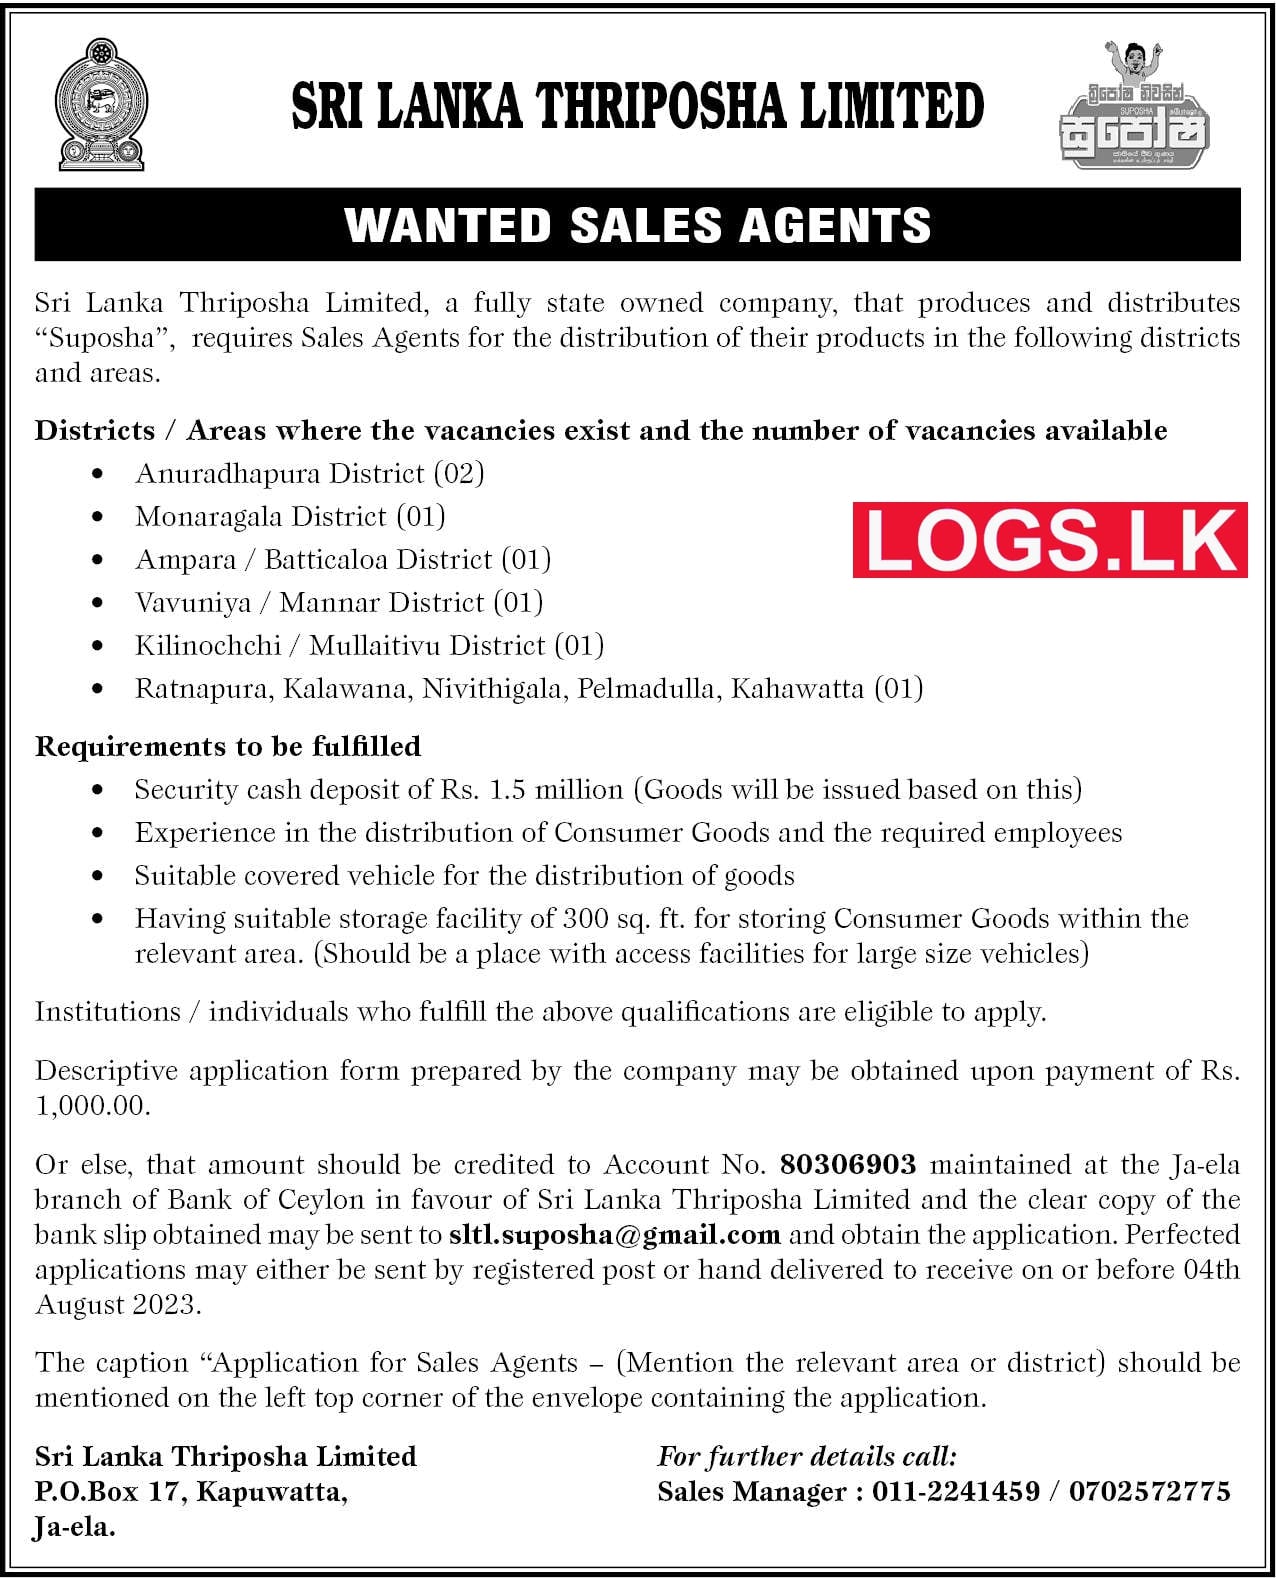 Sri Lanka Thriposha Limited Sales Agents Job Vacancy 2023 Application Form Download